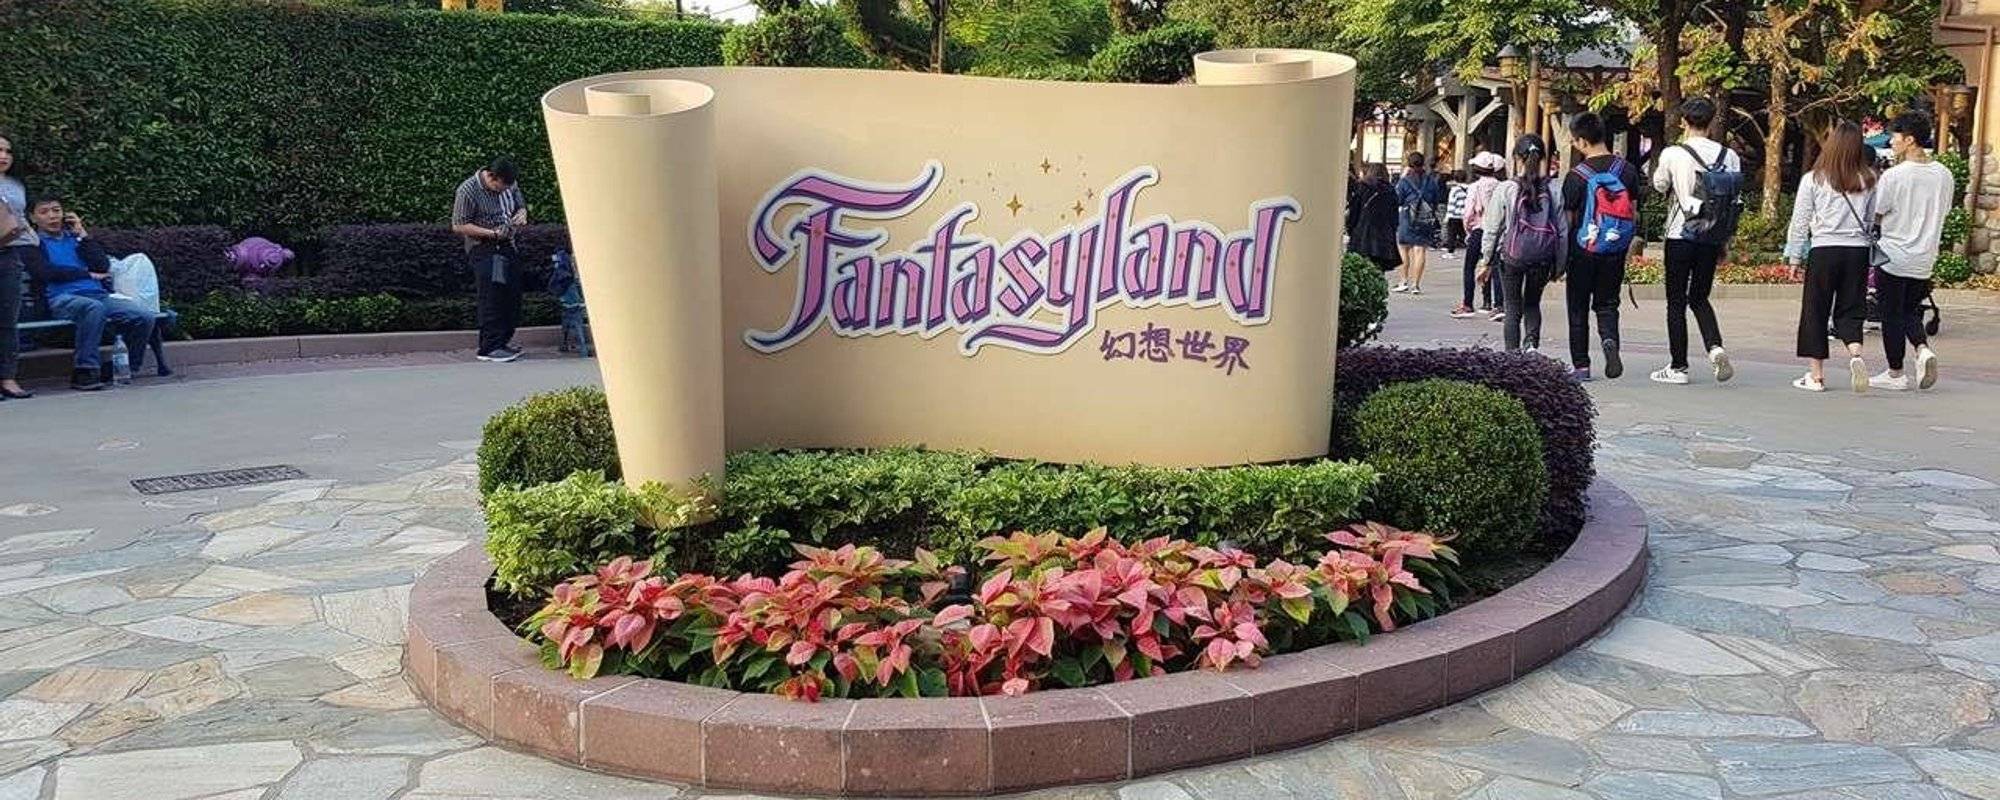 📷✈️Fantasy Land at Disneyland Hong Kong | 在香港迪士尼乐园之幻想世界 HK048 (by @ace108)